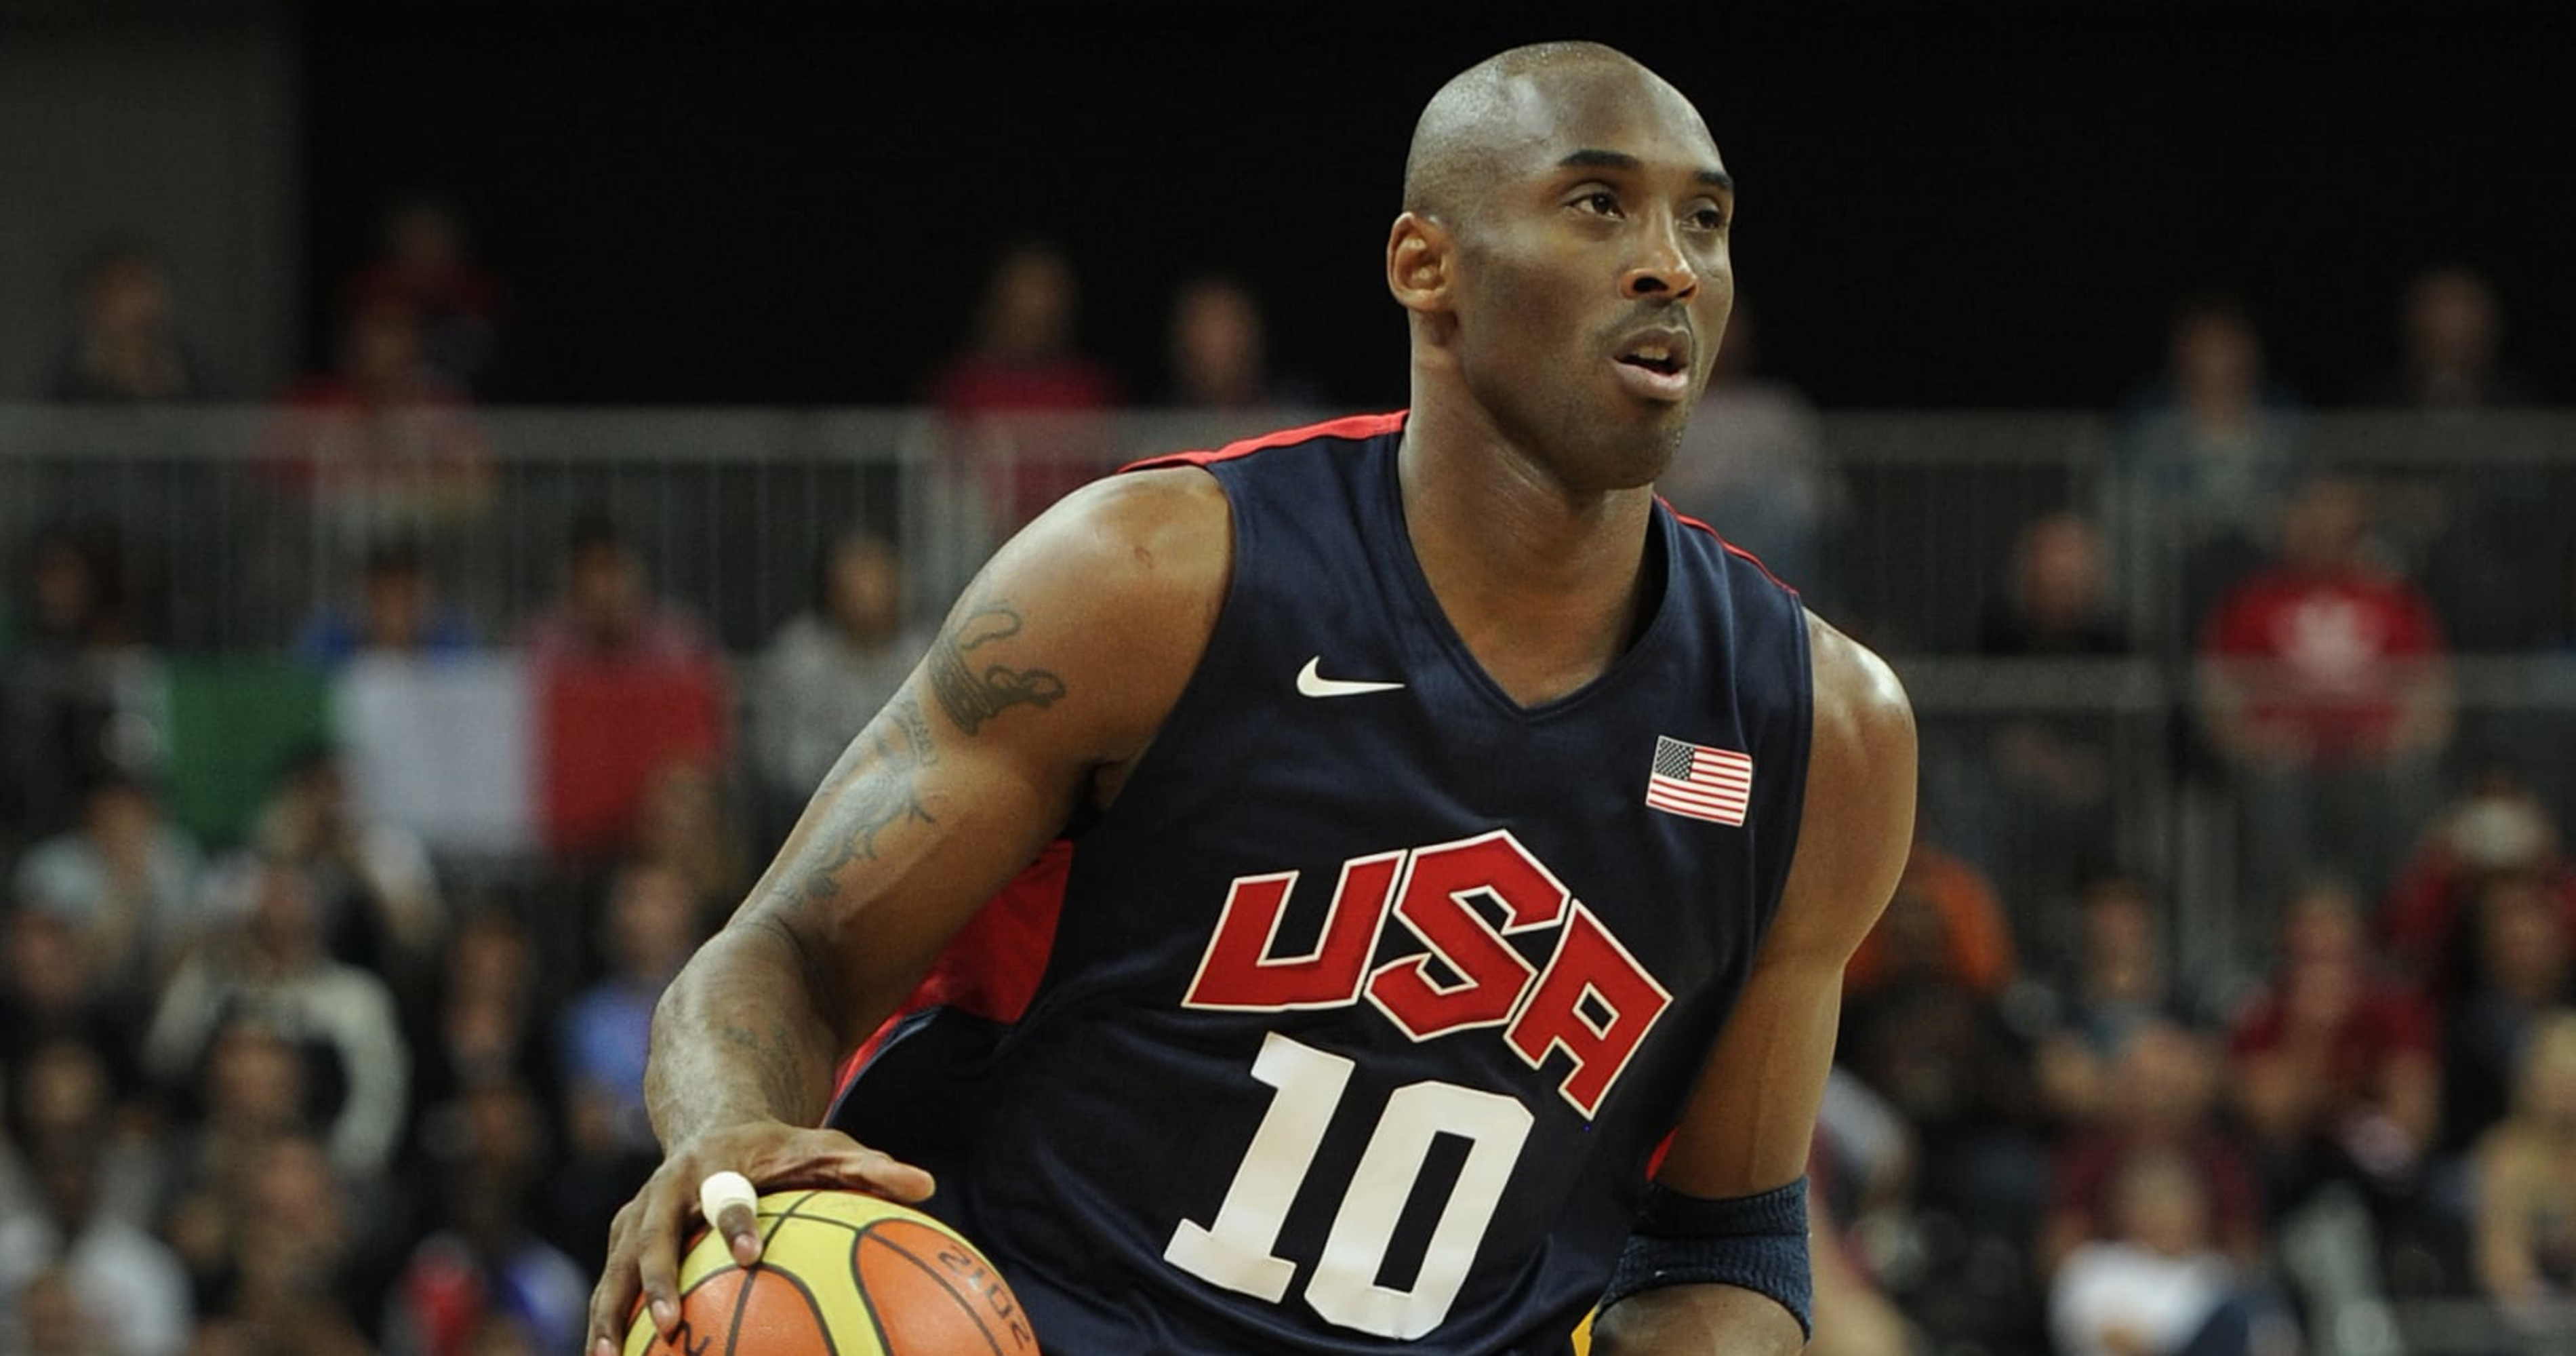 Jayson Tatum Wears Kobe Bryant's No. 10 Team USA Jersey: 'Nothing Short of an Honor'